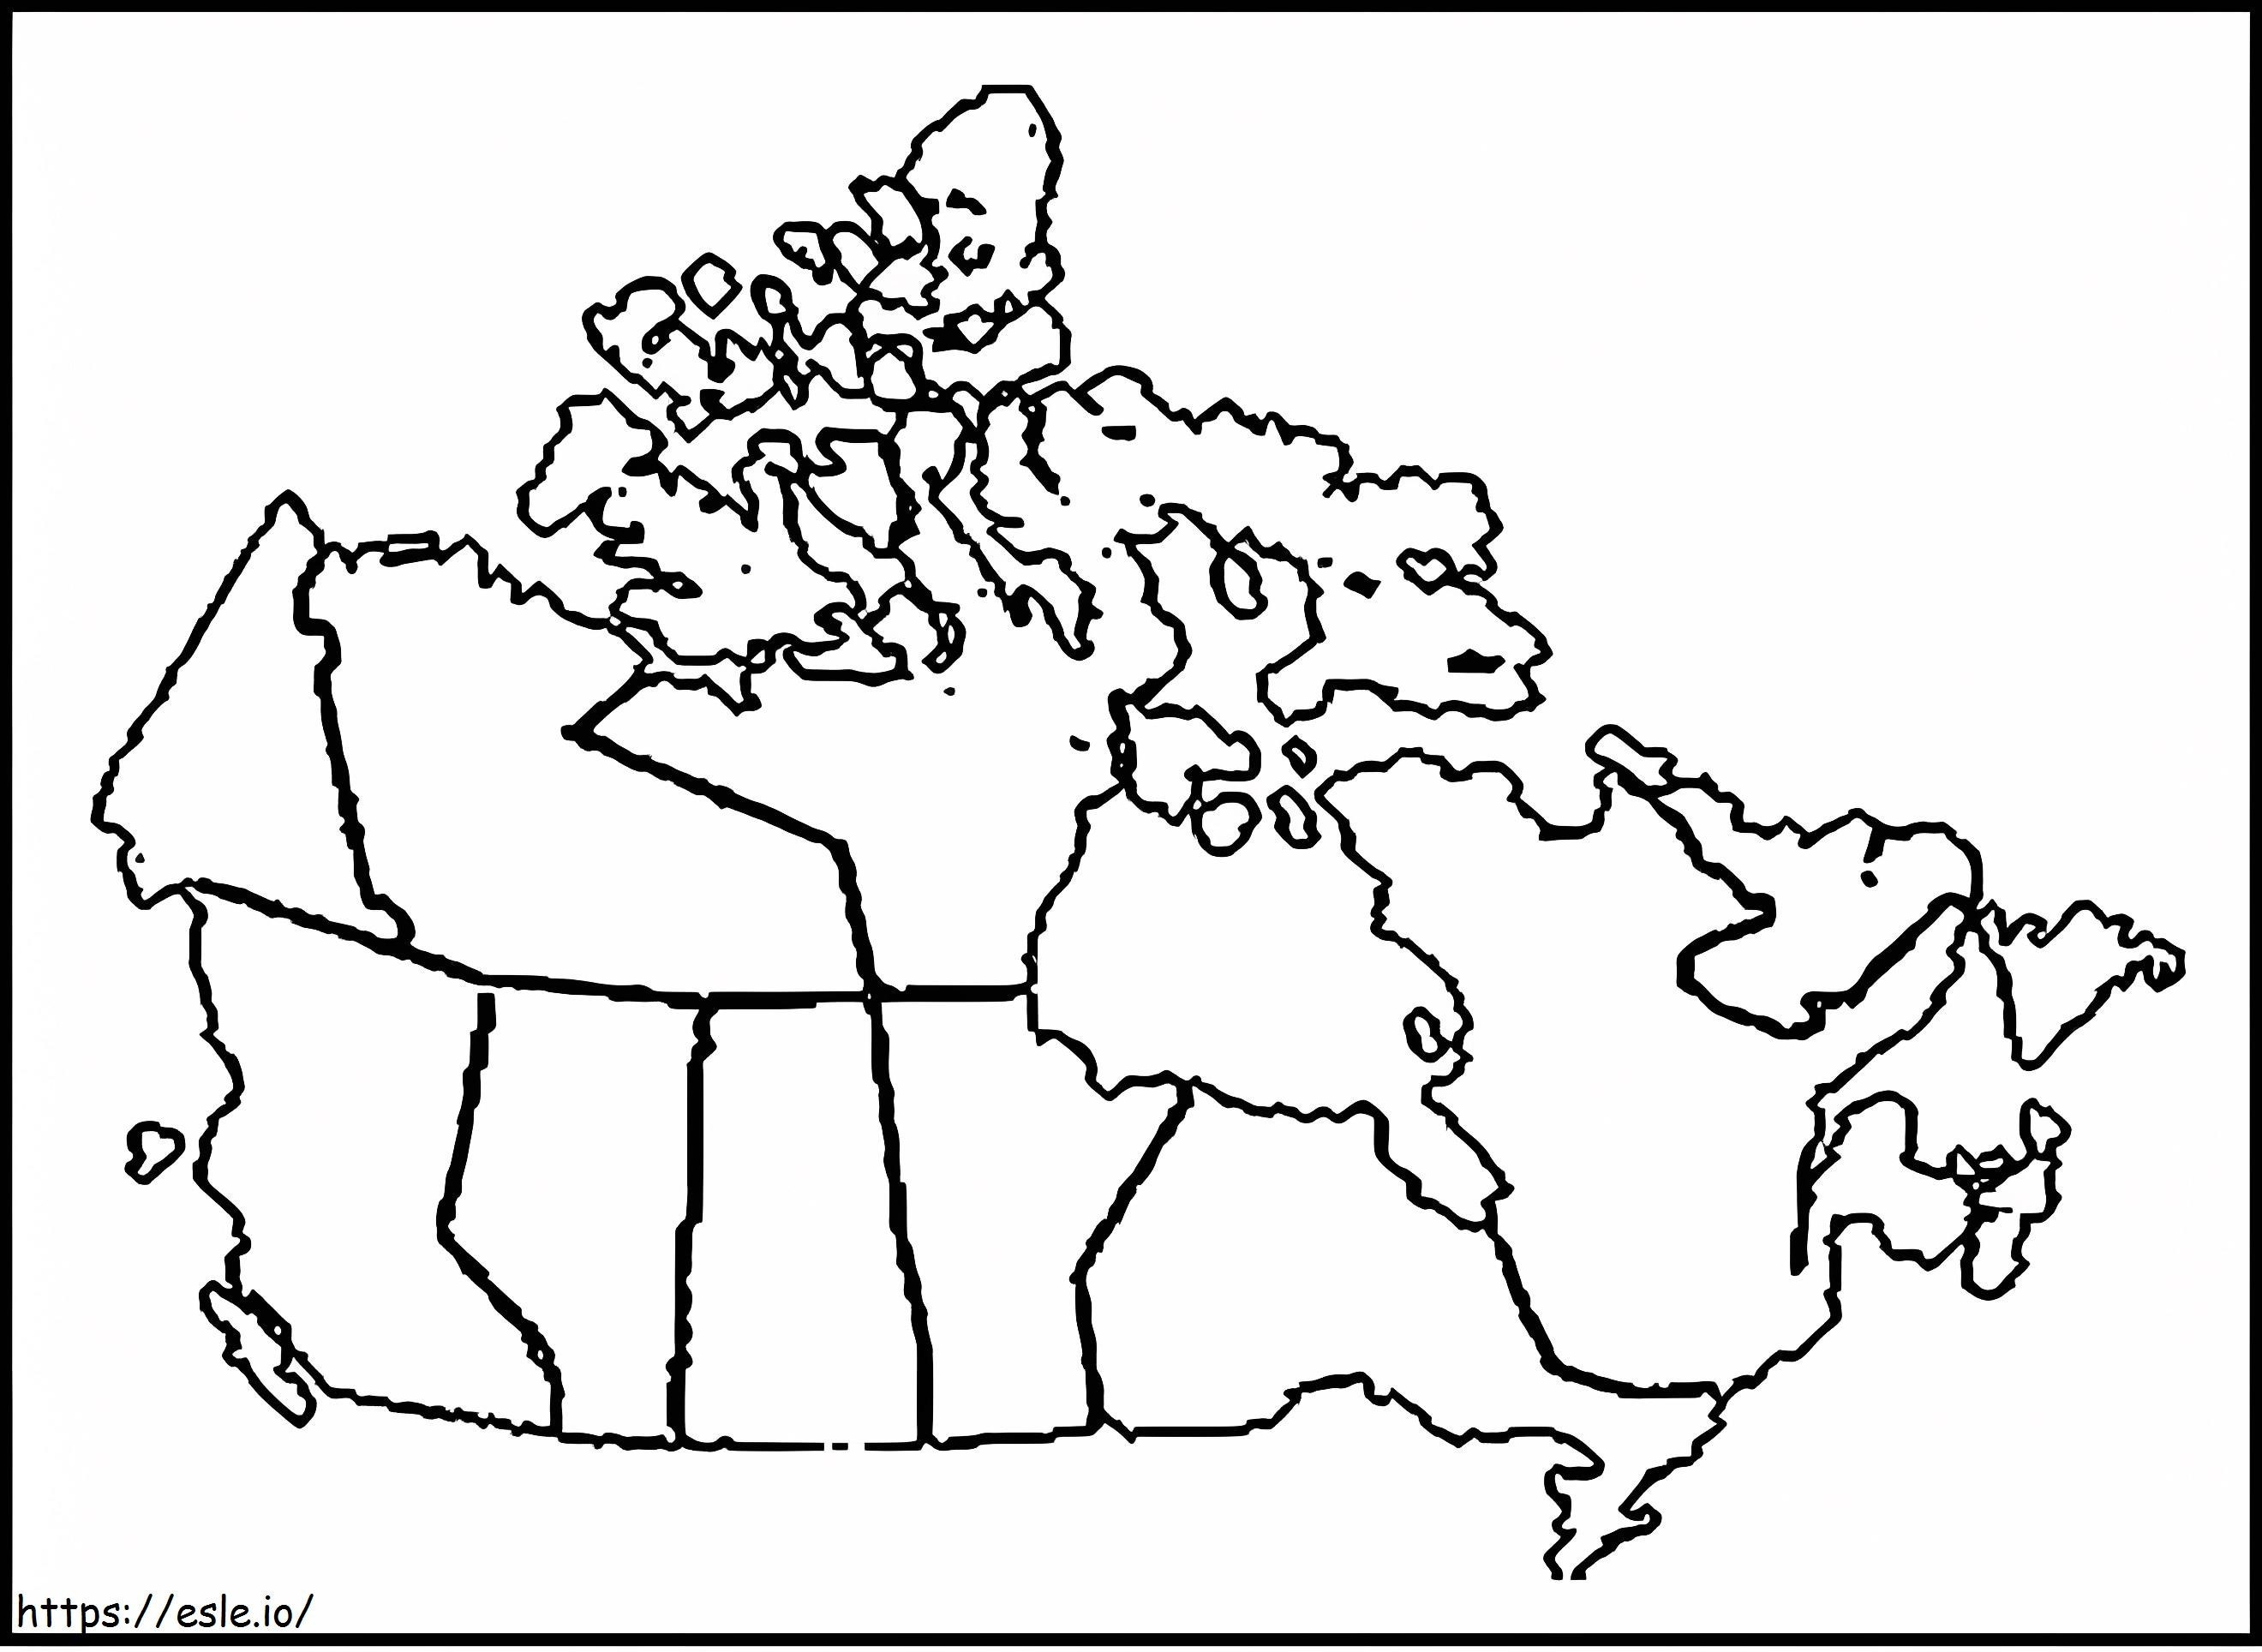 Kaart van Canada 5 kleurplaat kleurplaat